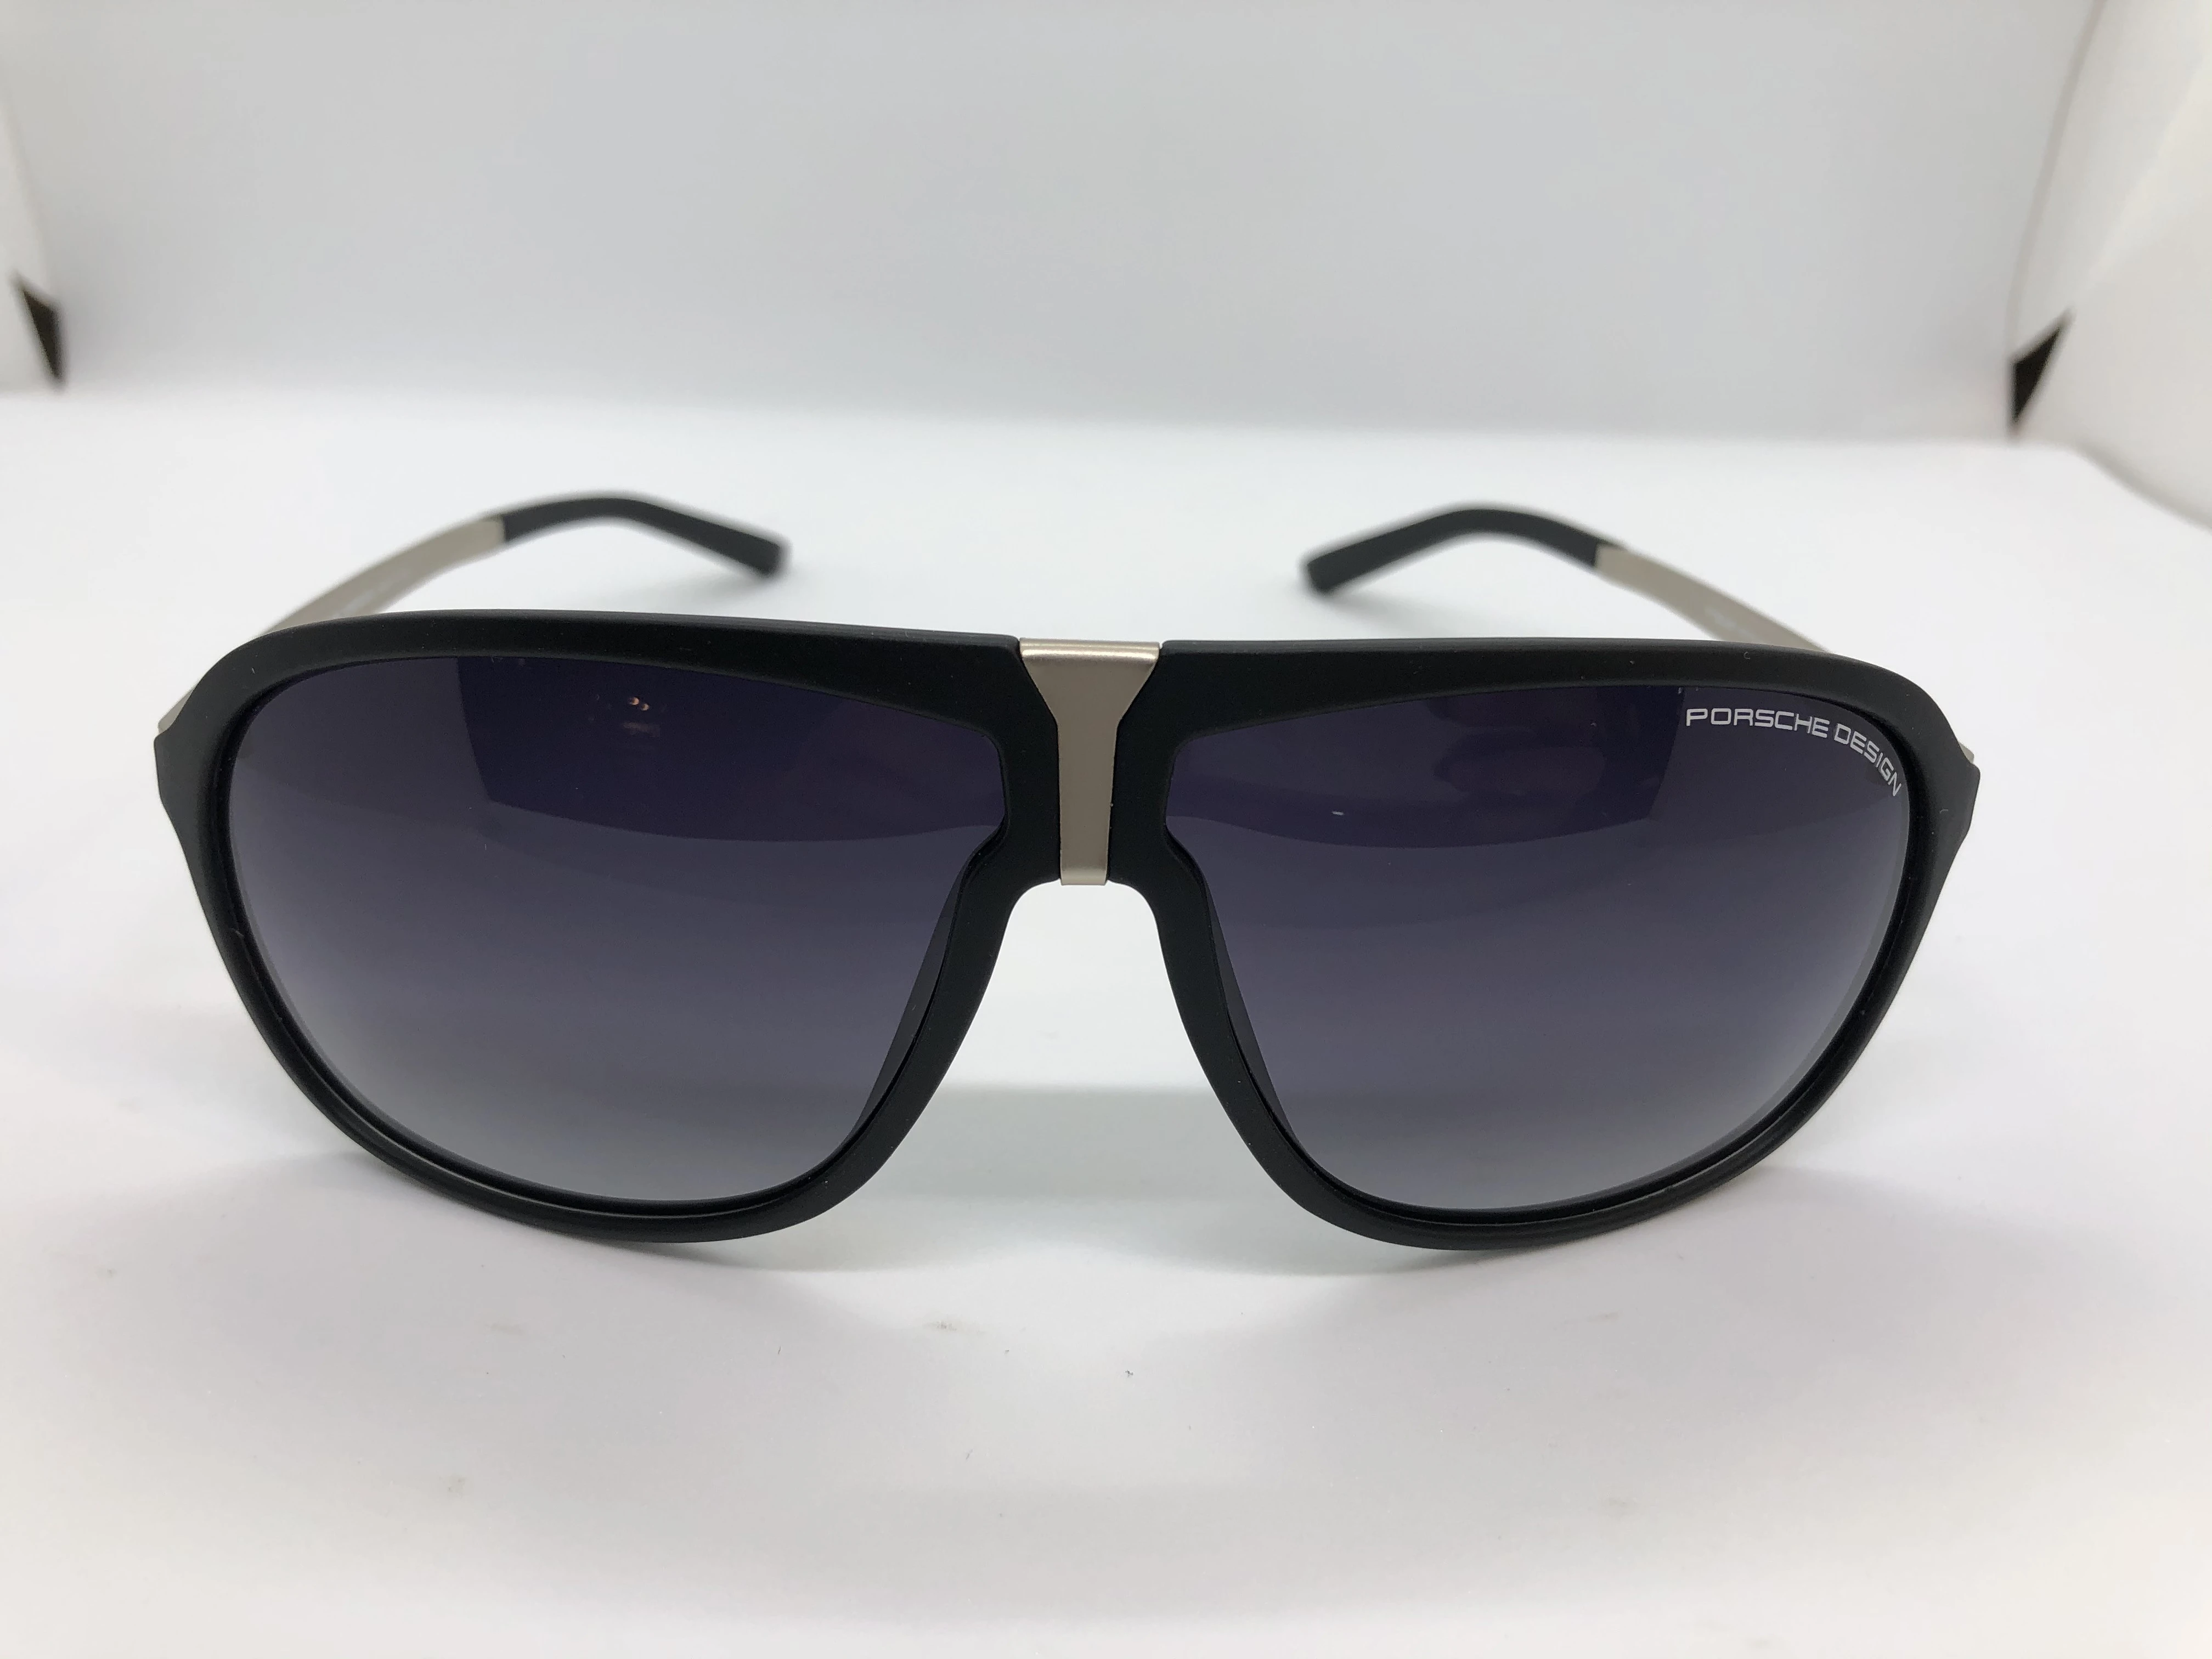 Sunglasses - Porsche Design - Black Polycarbonate Frame - Black Gradient Lenses - Silver Metal Arm - Logo - For Men